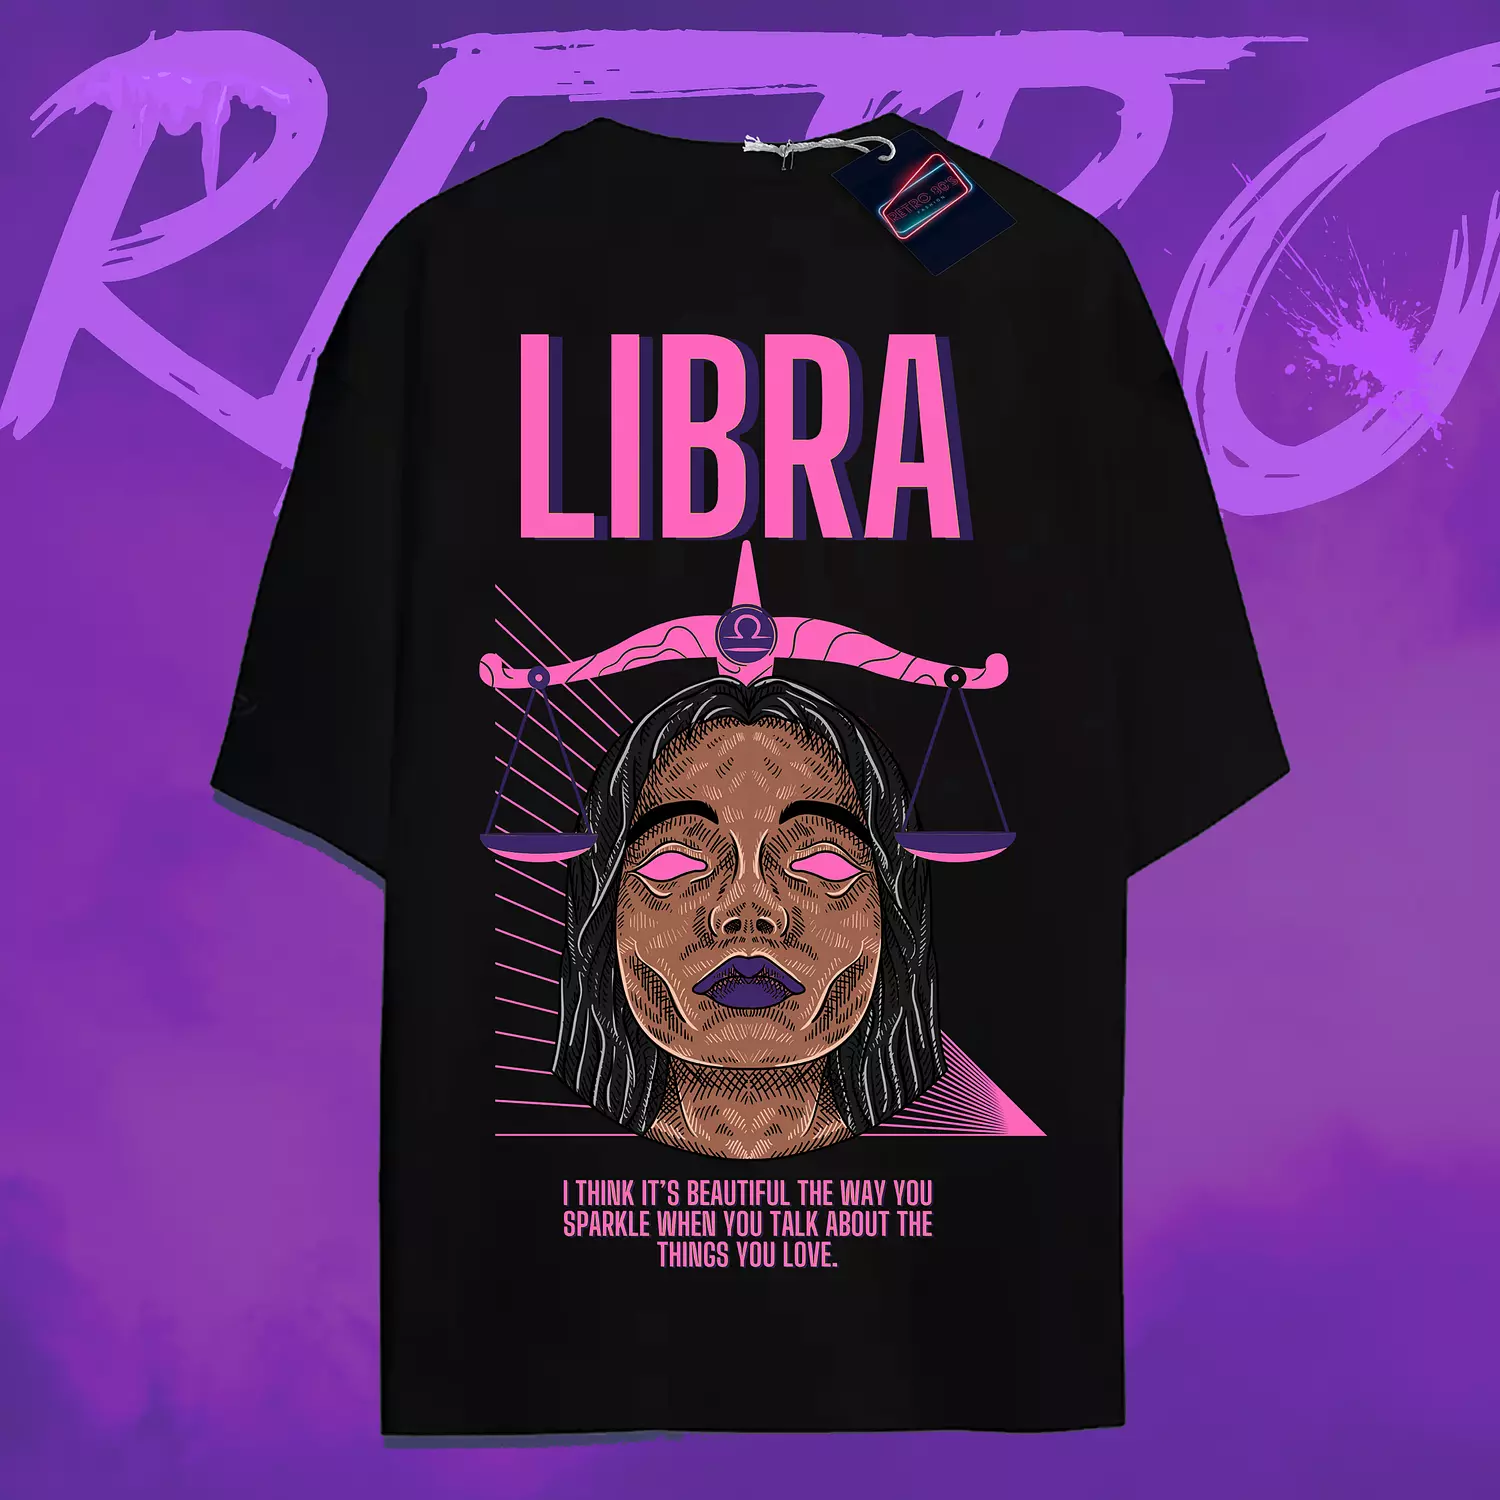 Libra T-shirt hover image